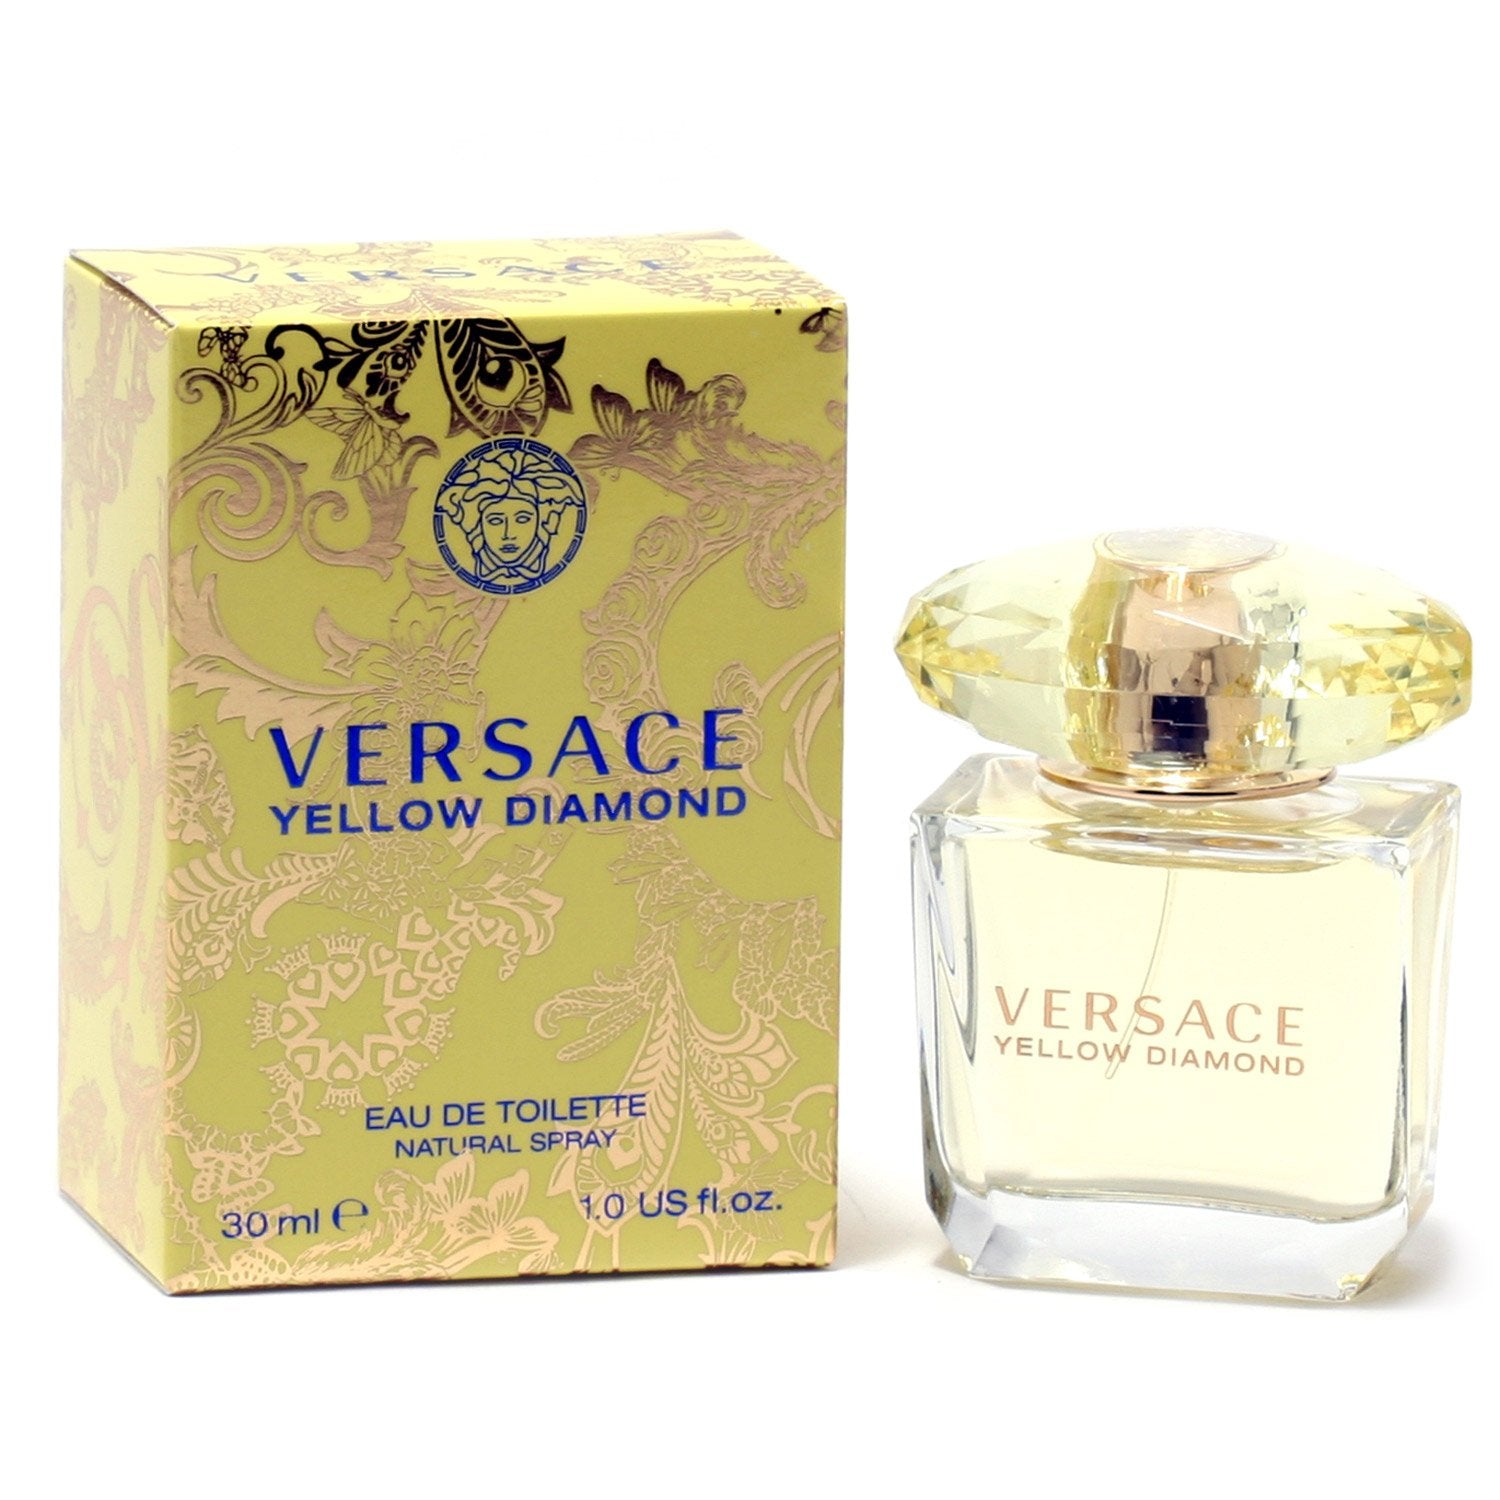 Dolce & Gabbana The Only One Eau De Parfum Spray para mujer, 3.3 onzas,  Multi